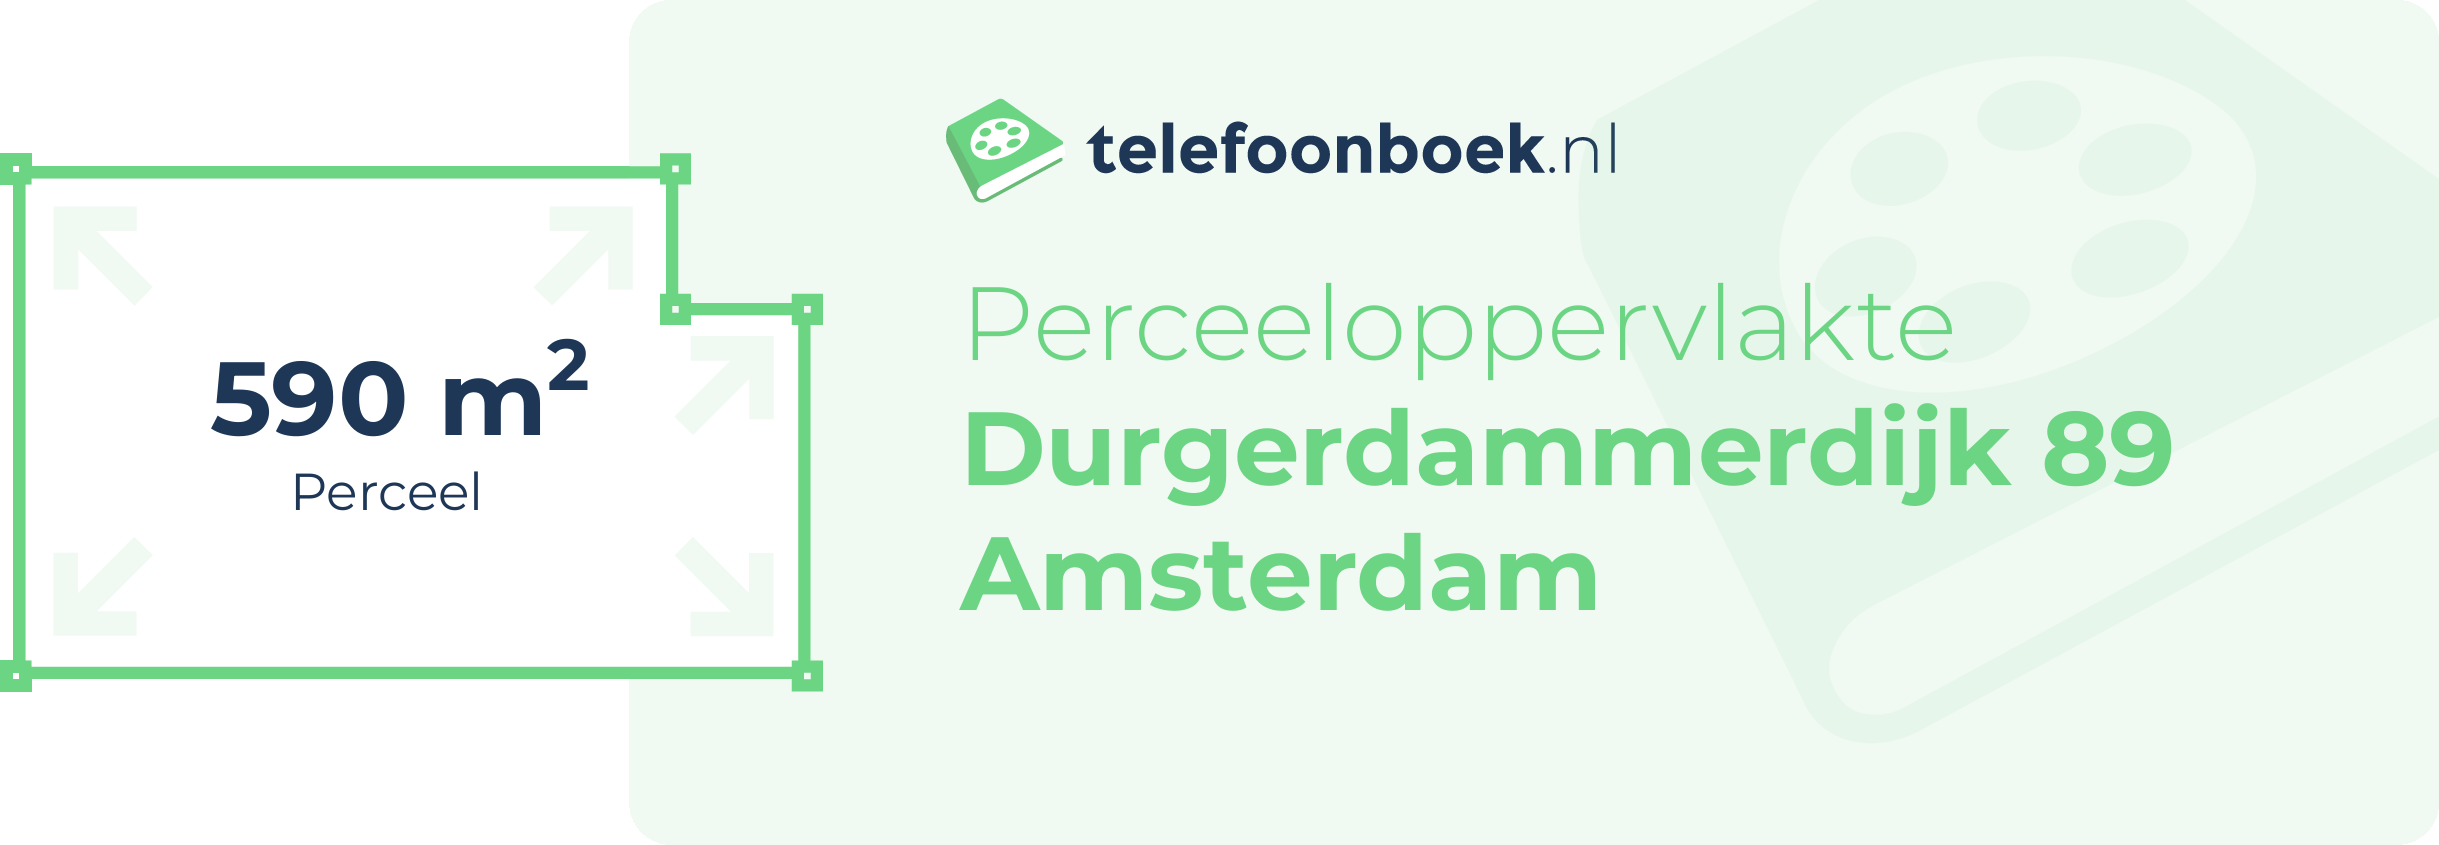 Perceeloppervlakte Durgerdammerdijk 89 Amsterdam